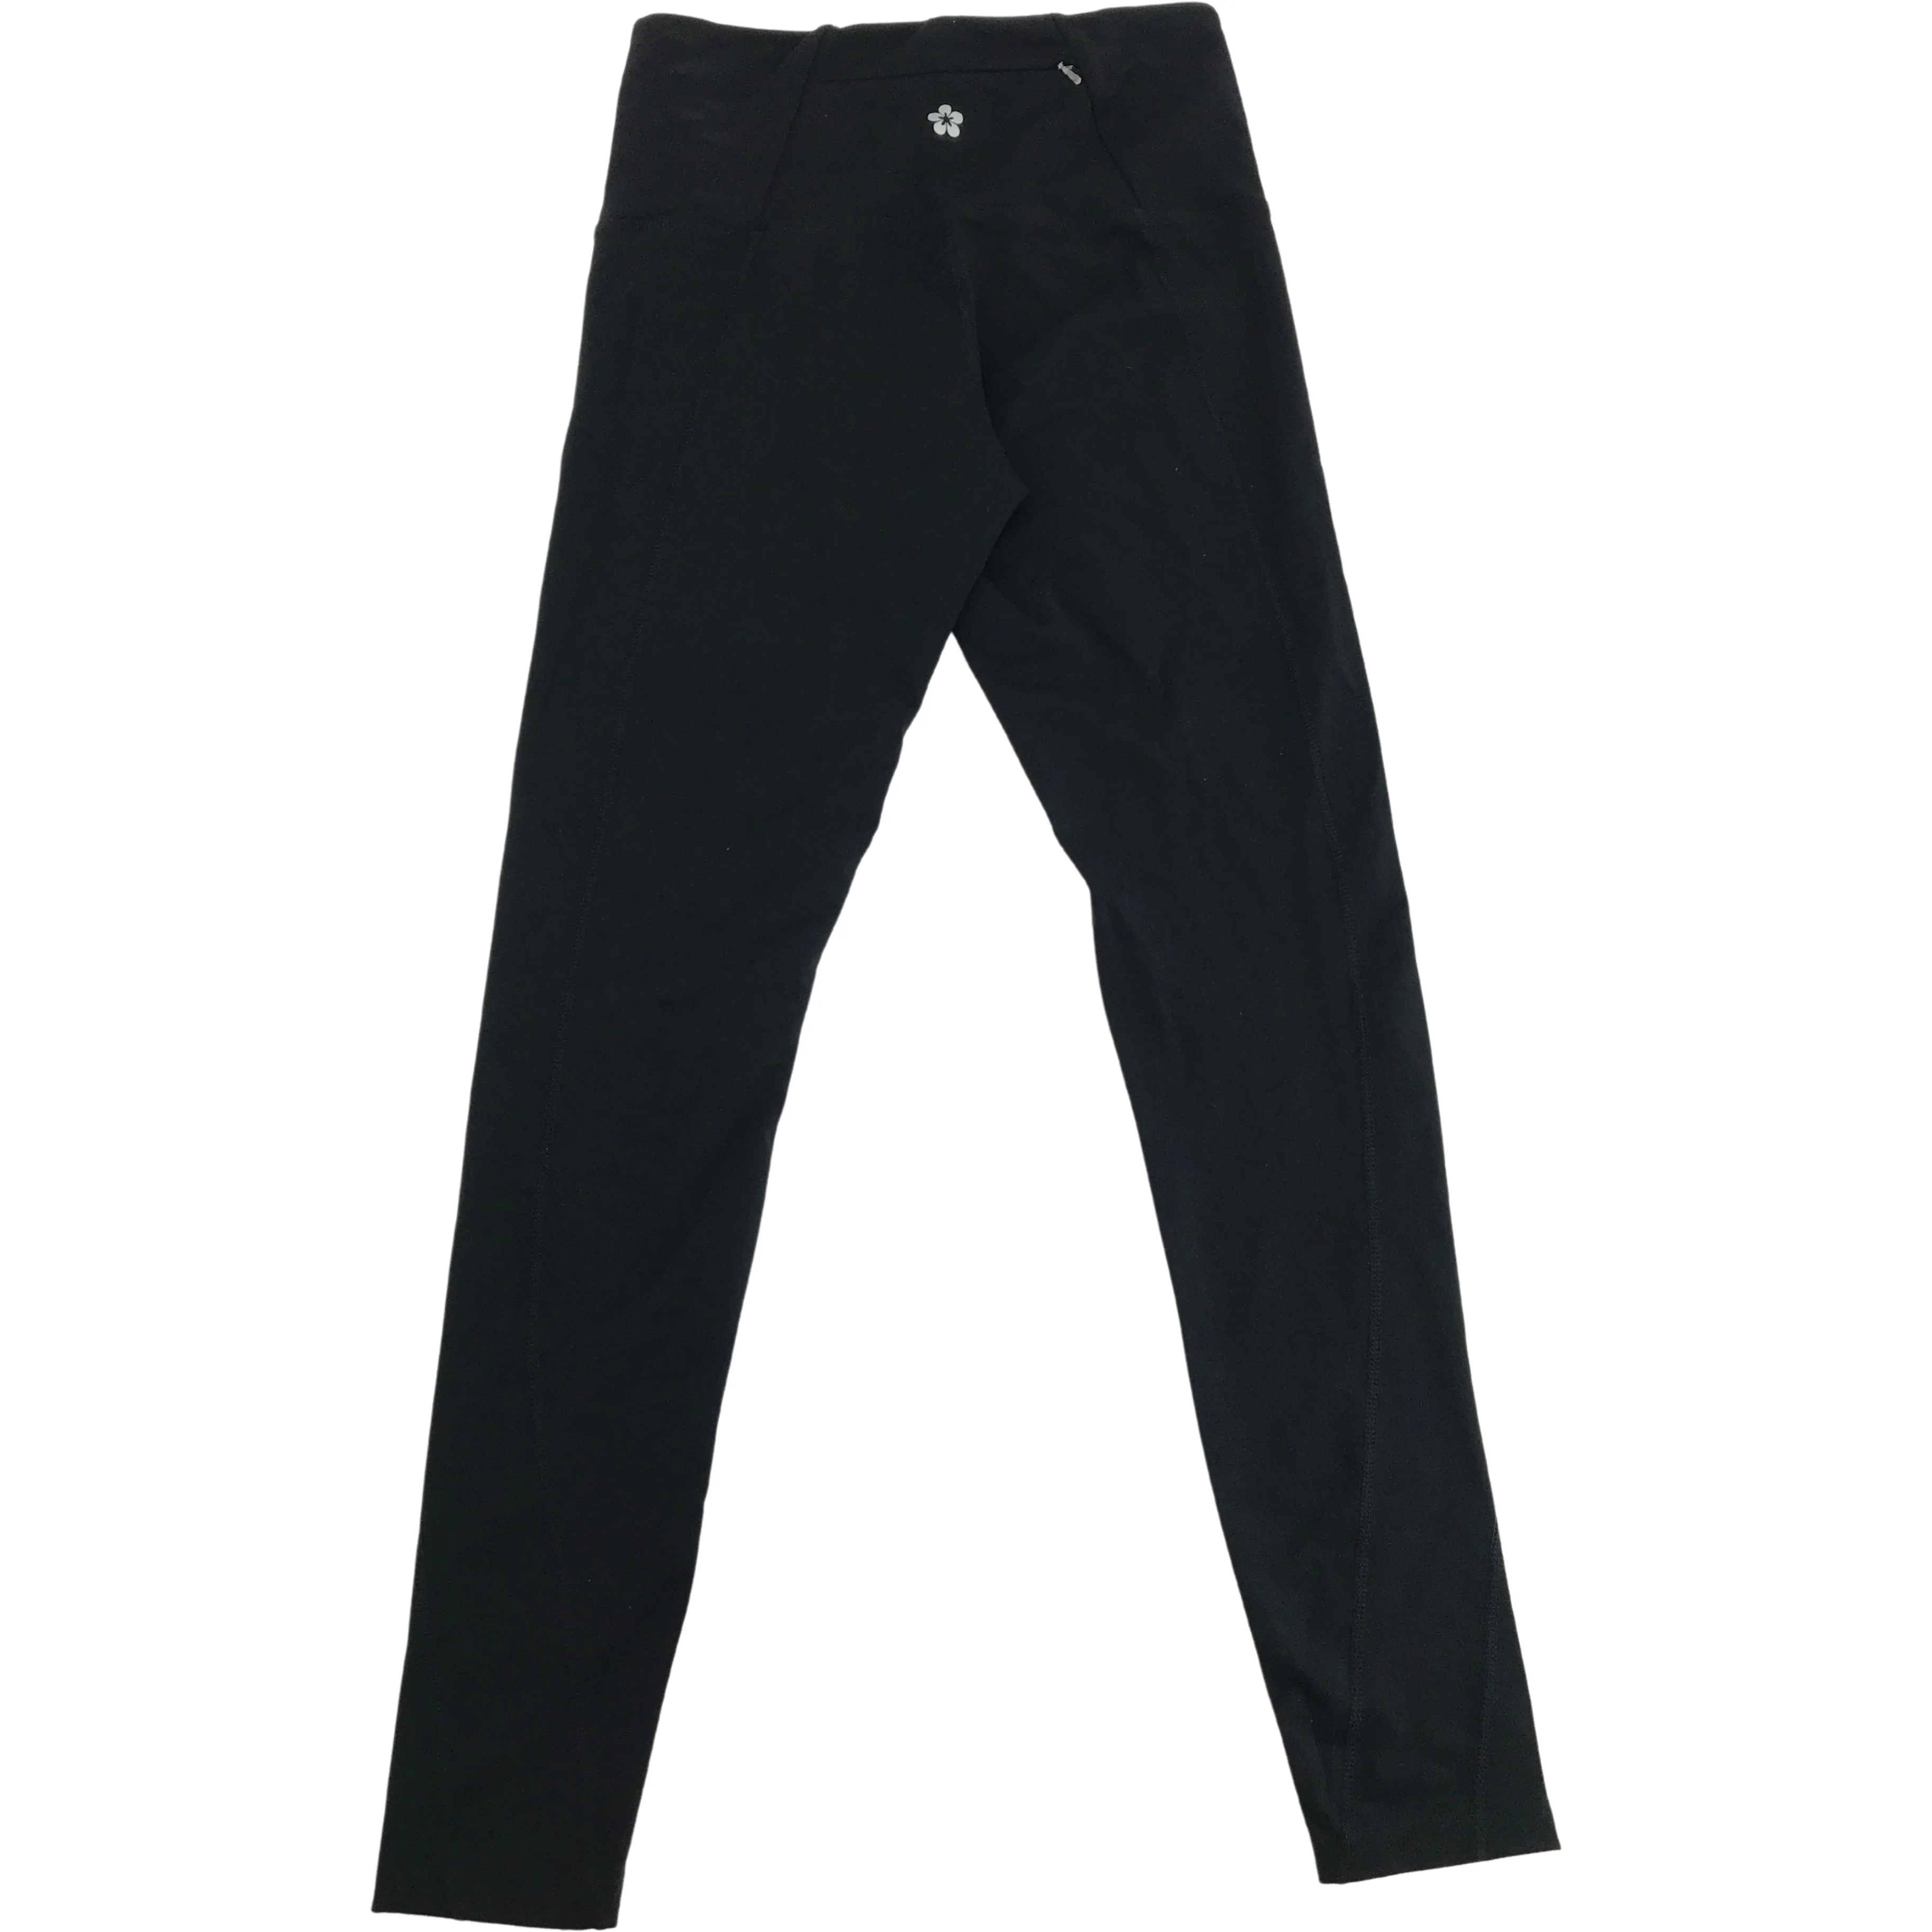 Tuff Athletics Women's Leggings: Black / Yoga Pants / Active Pants / Various Sizes